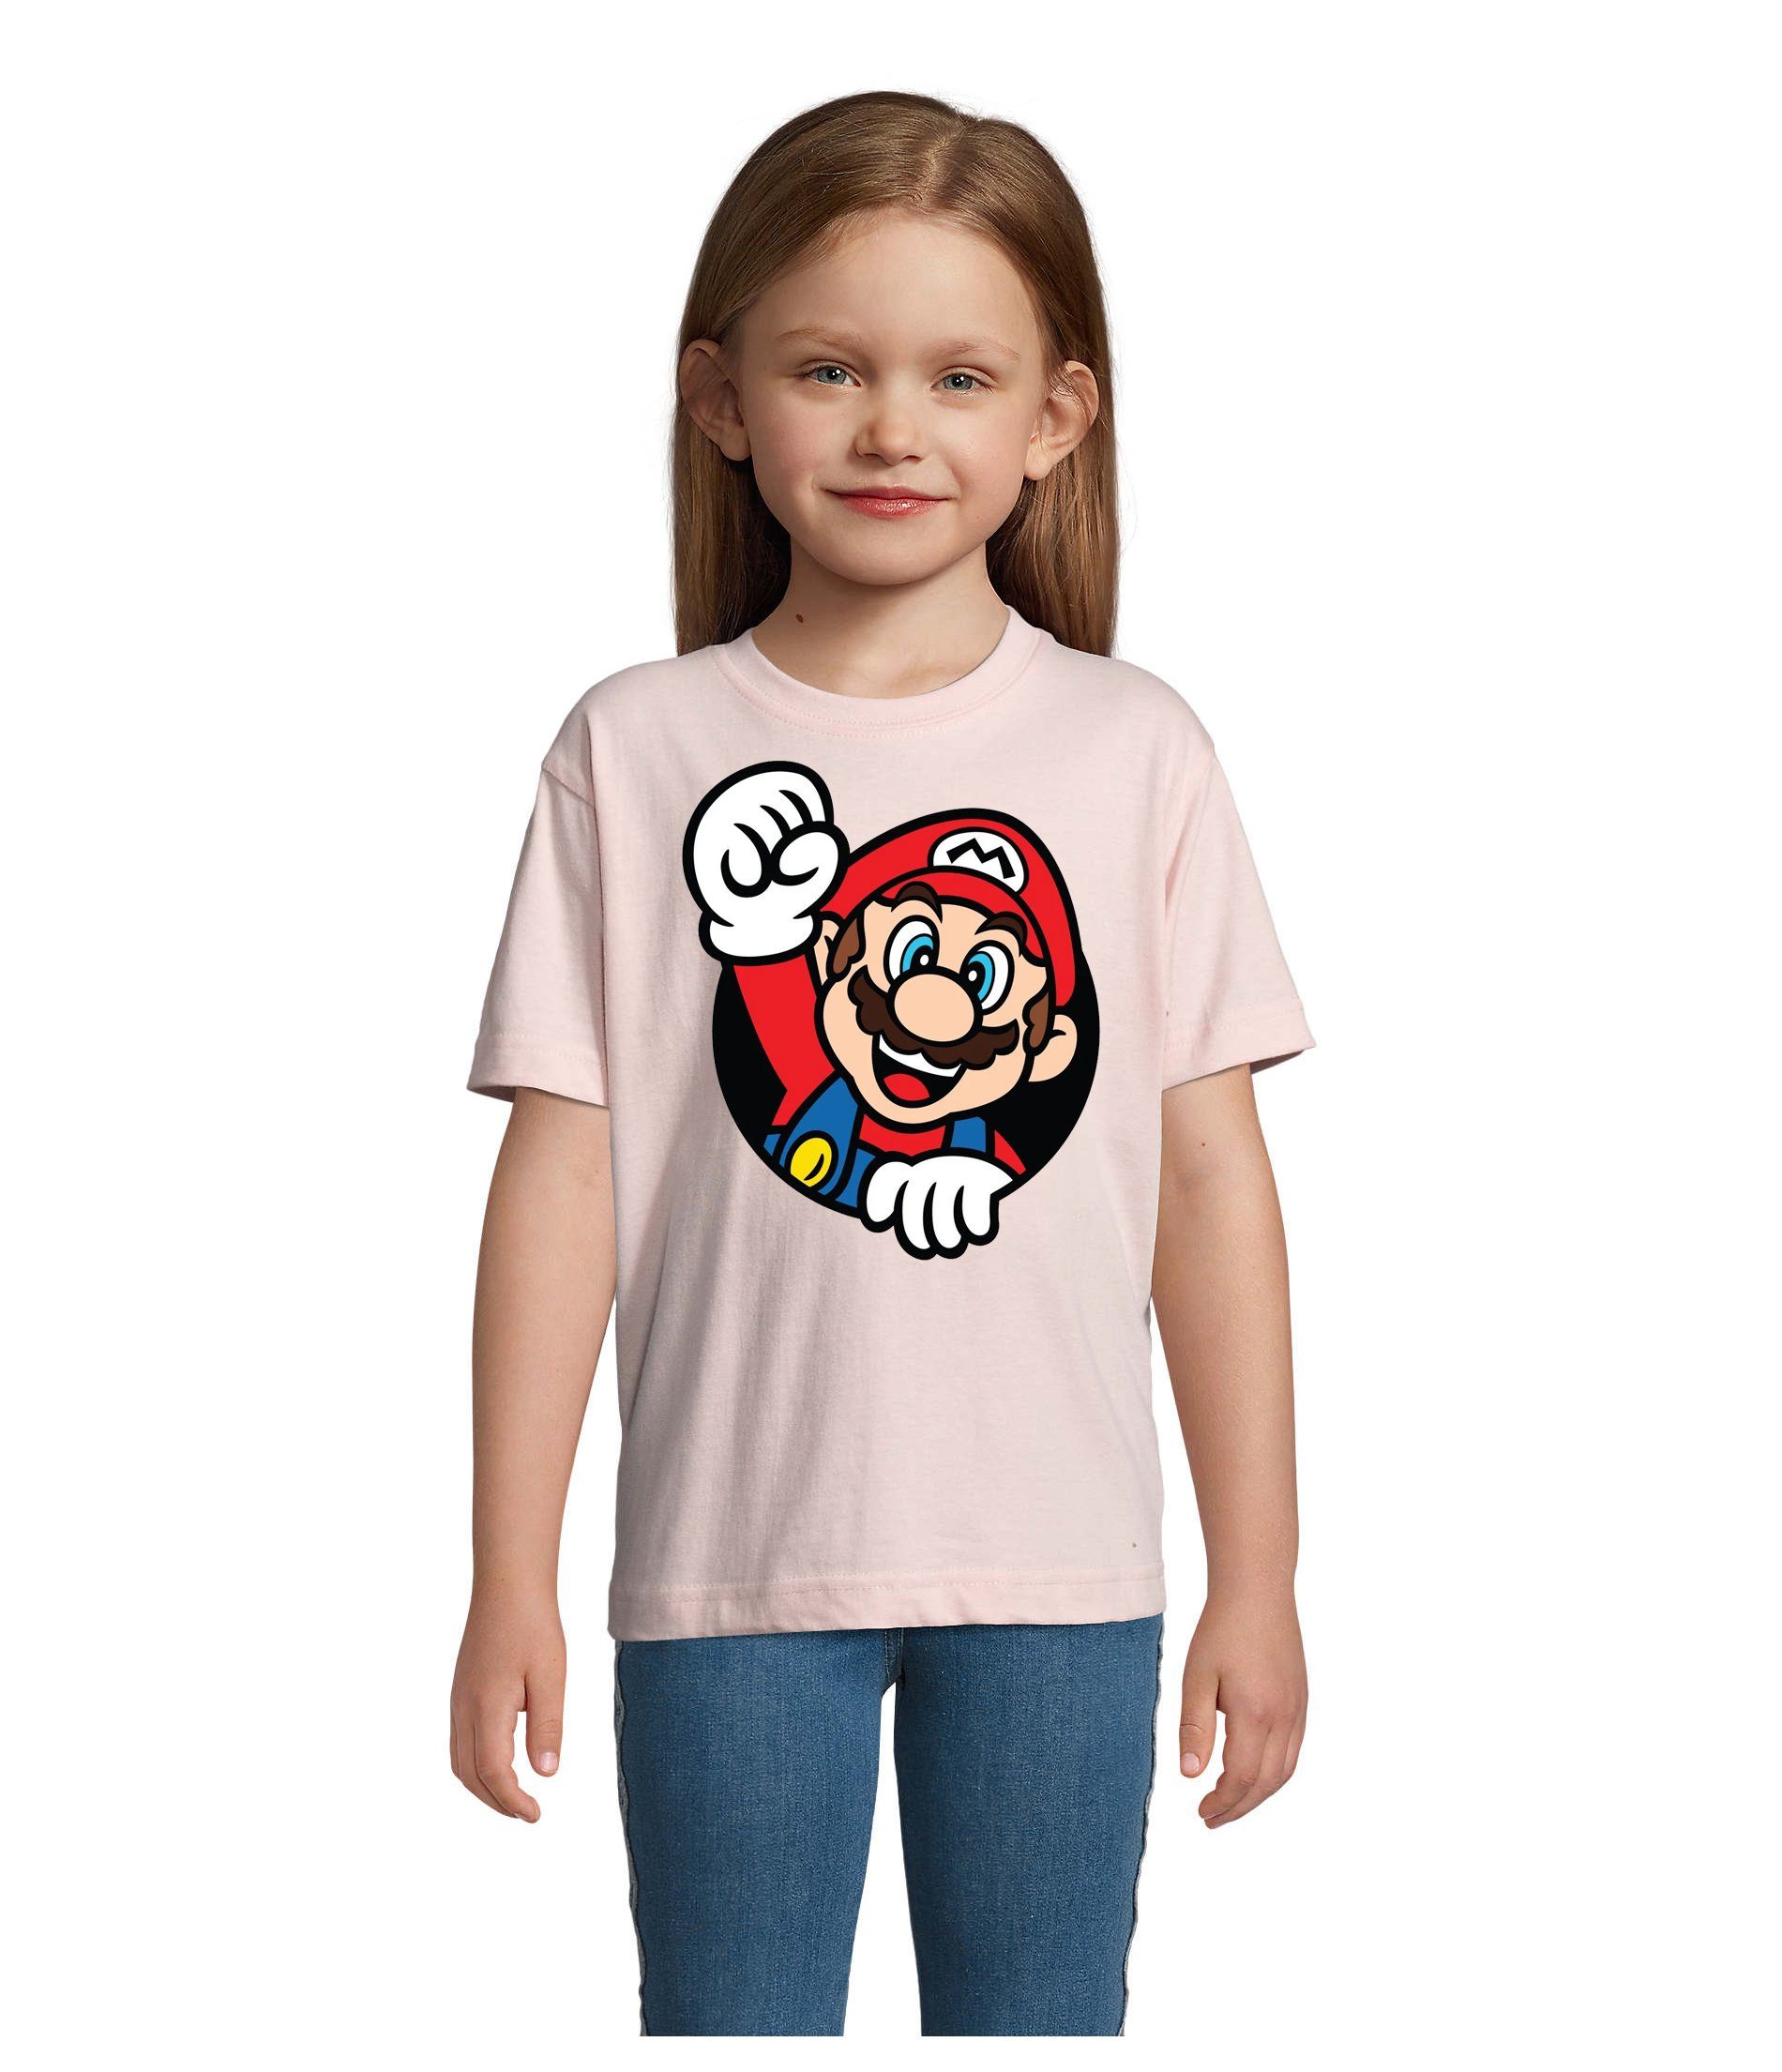 Blondie & Brownie T-Shirt Kinder Spiel Gaming Nerd Konsole Faust Konsole Super Rosa Nintendo Mario